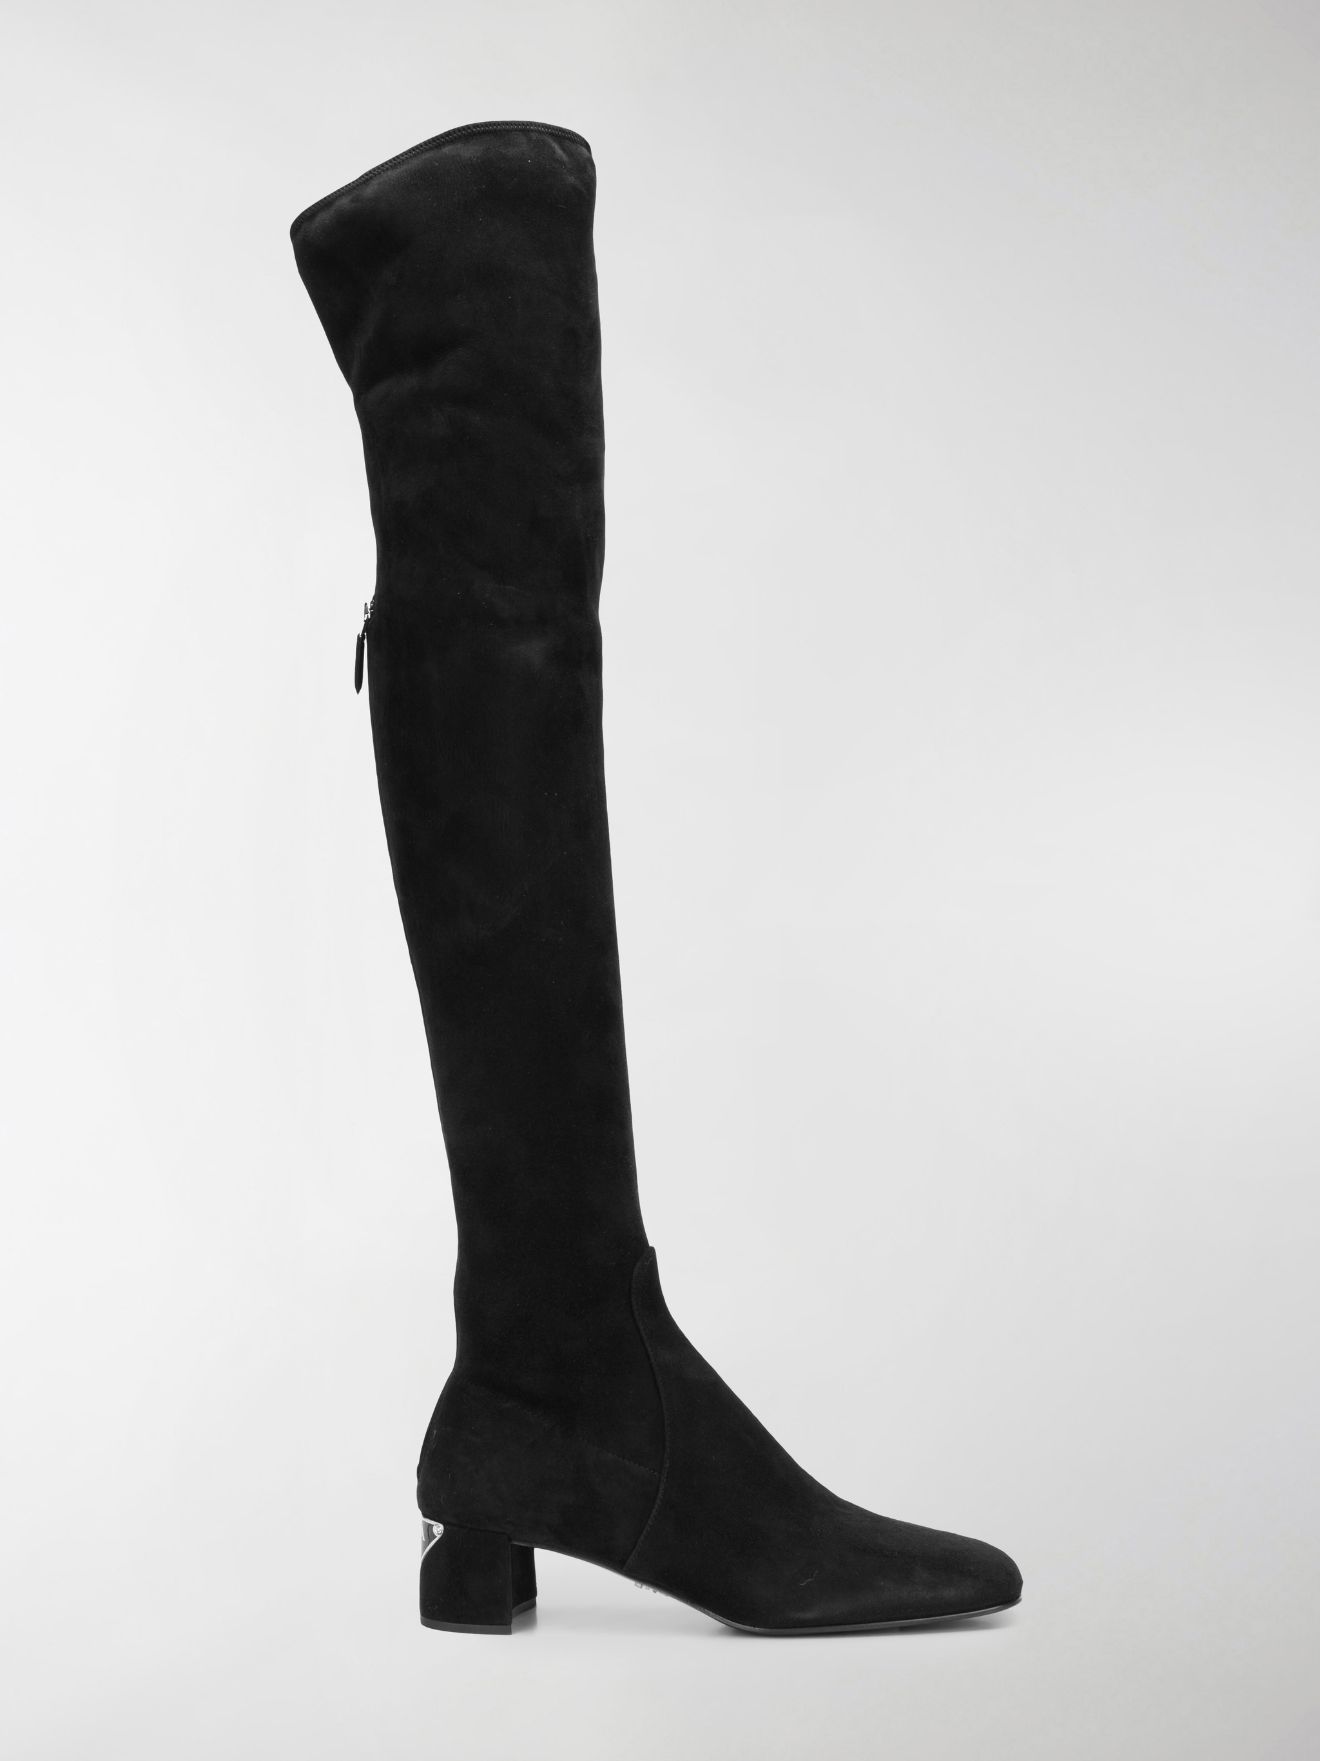 Prada over-the-knee boots black | MODES